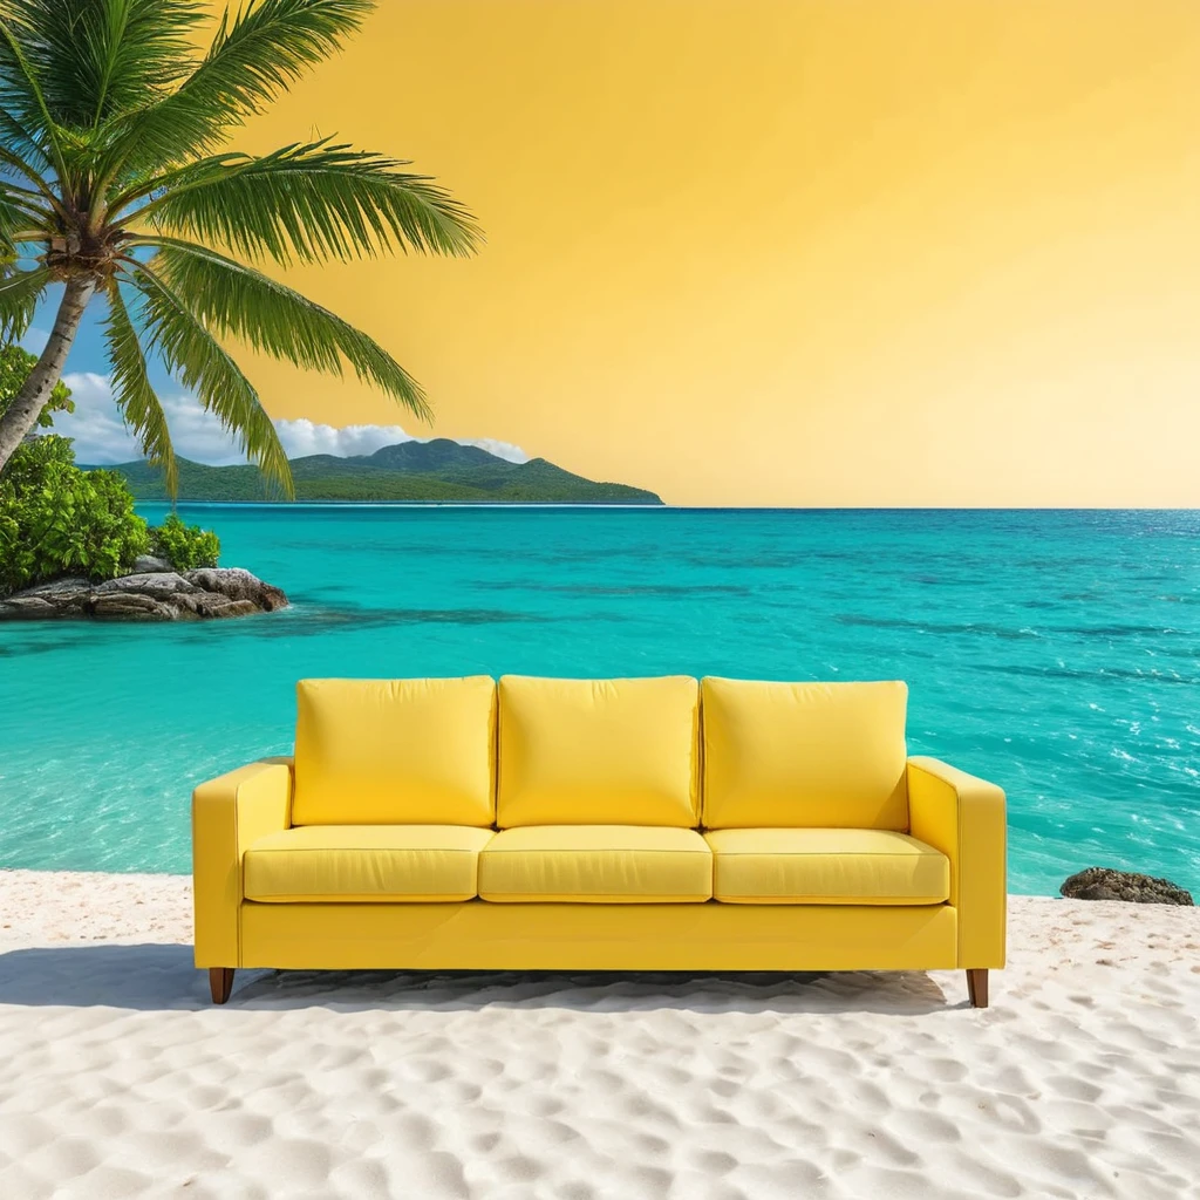 (sofa showcase) <lora:31_sofa_showcase:1.1>
Yellow background,
high quality, professional, highres, amazing, dramatic,
(Tr...